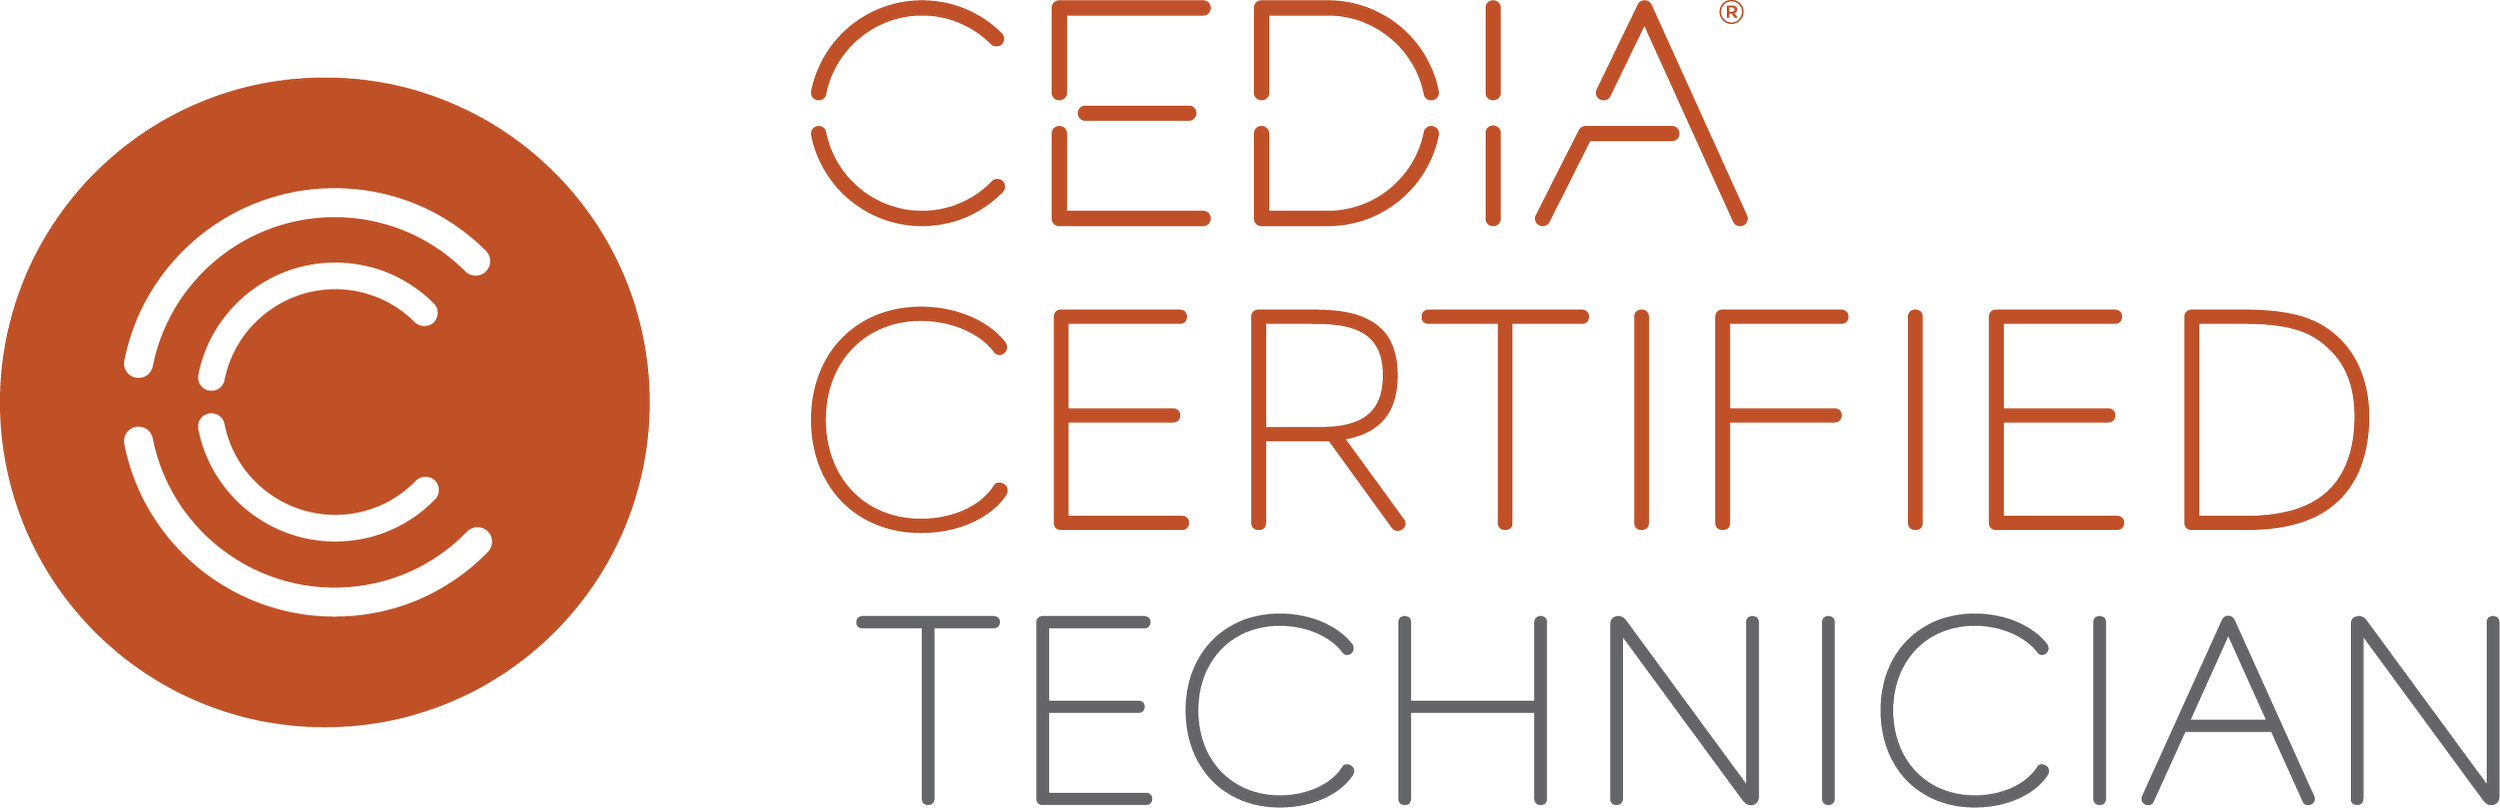 CediaTech.png